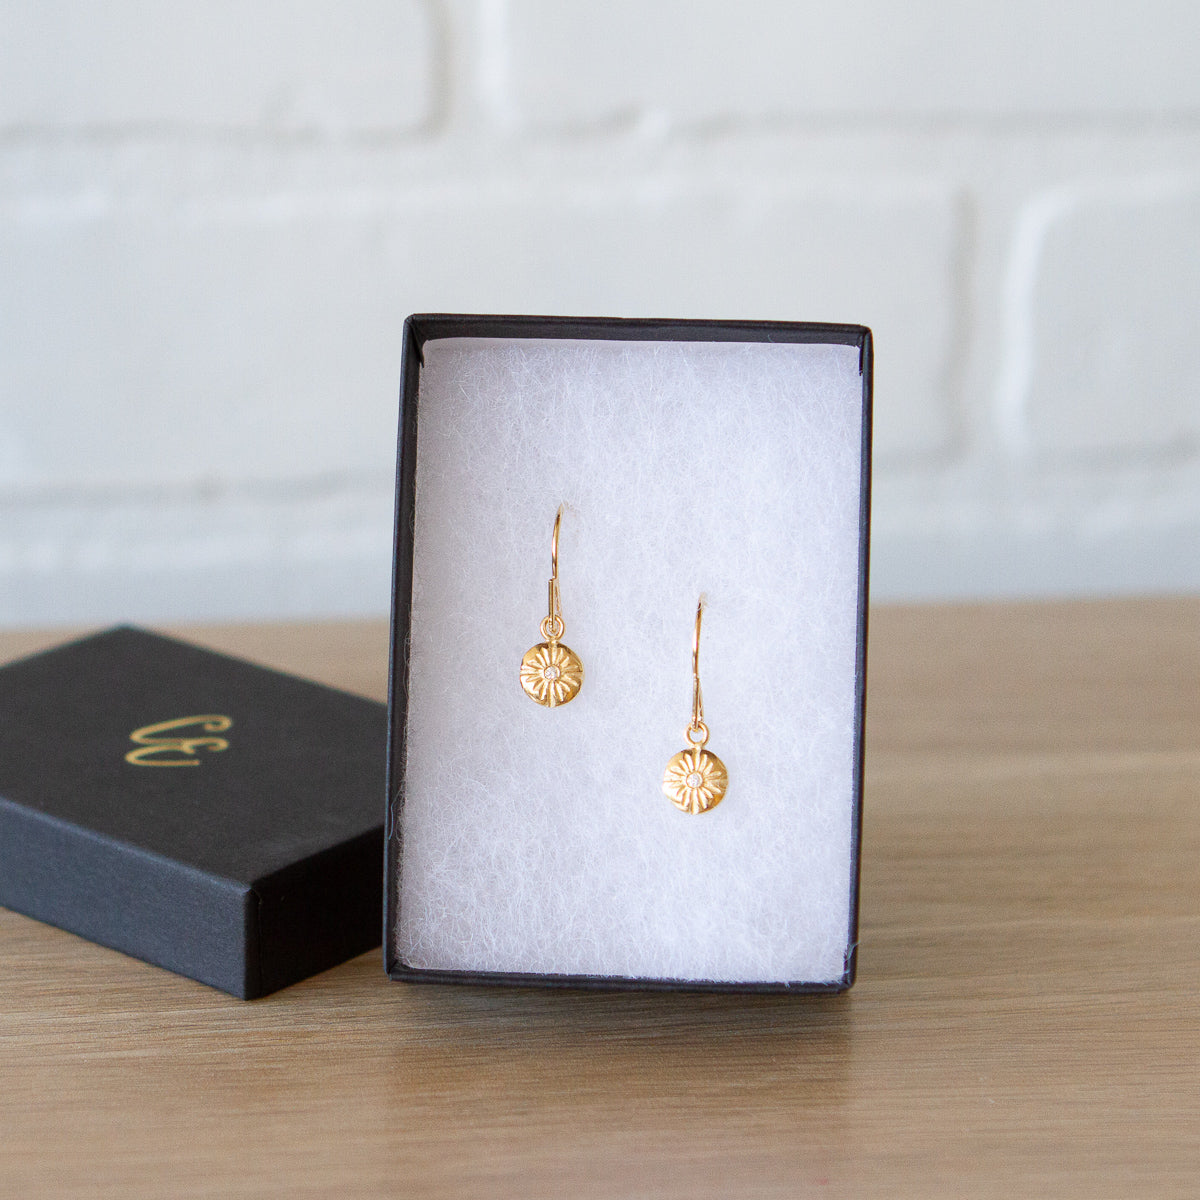 Small Lucia Dangle Earrings in Vermeil in a gift box by Corey Egan